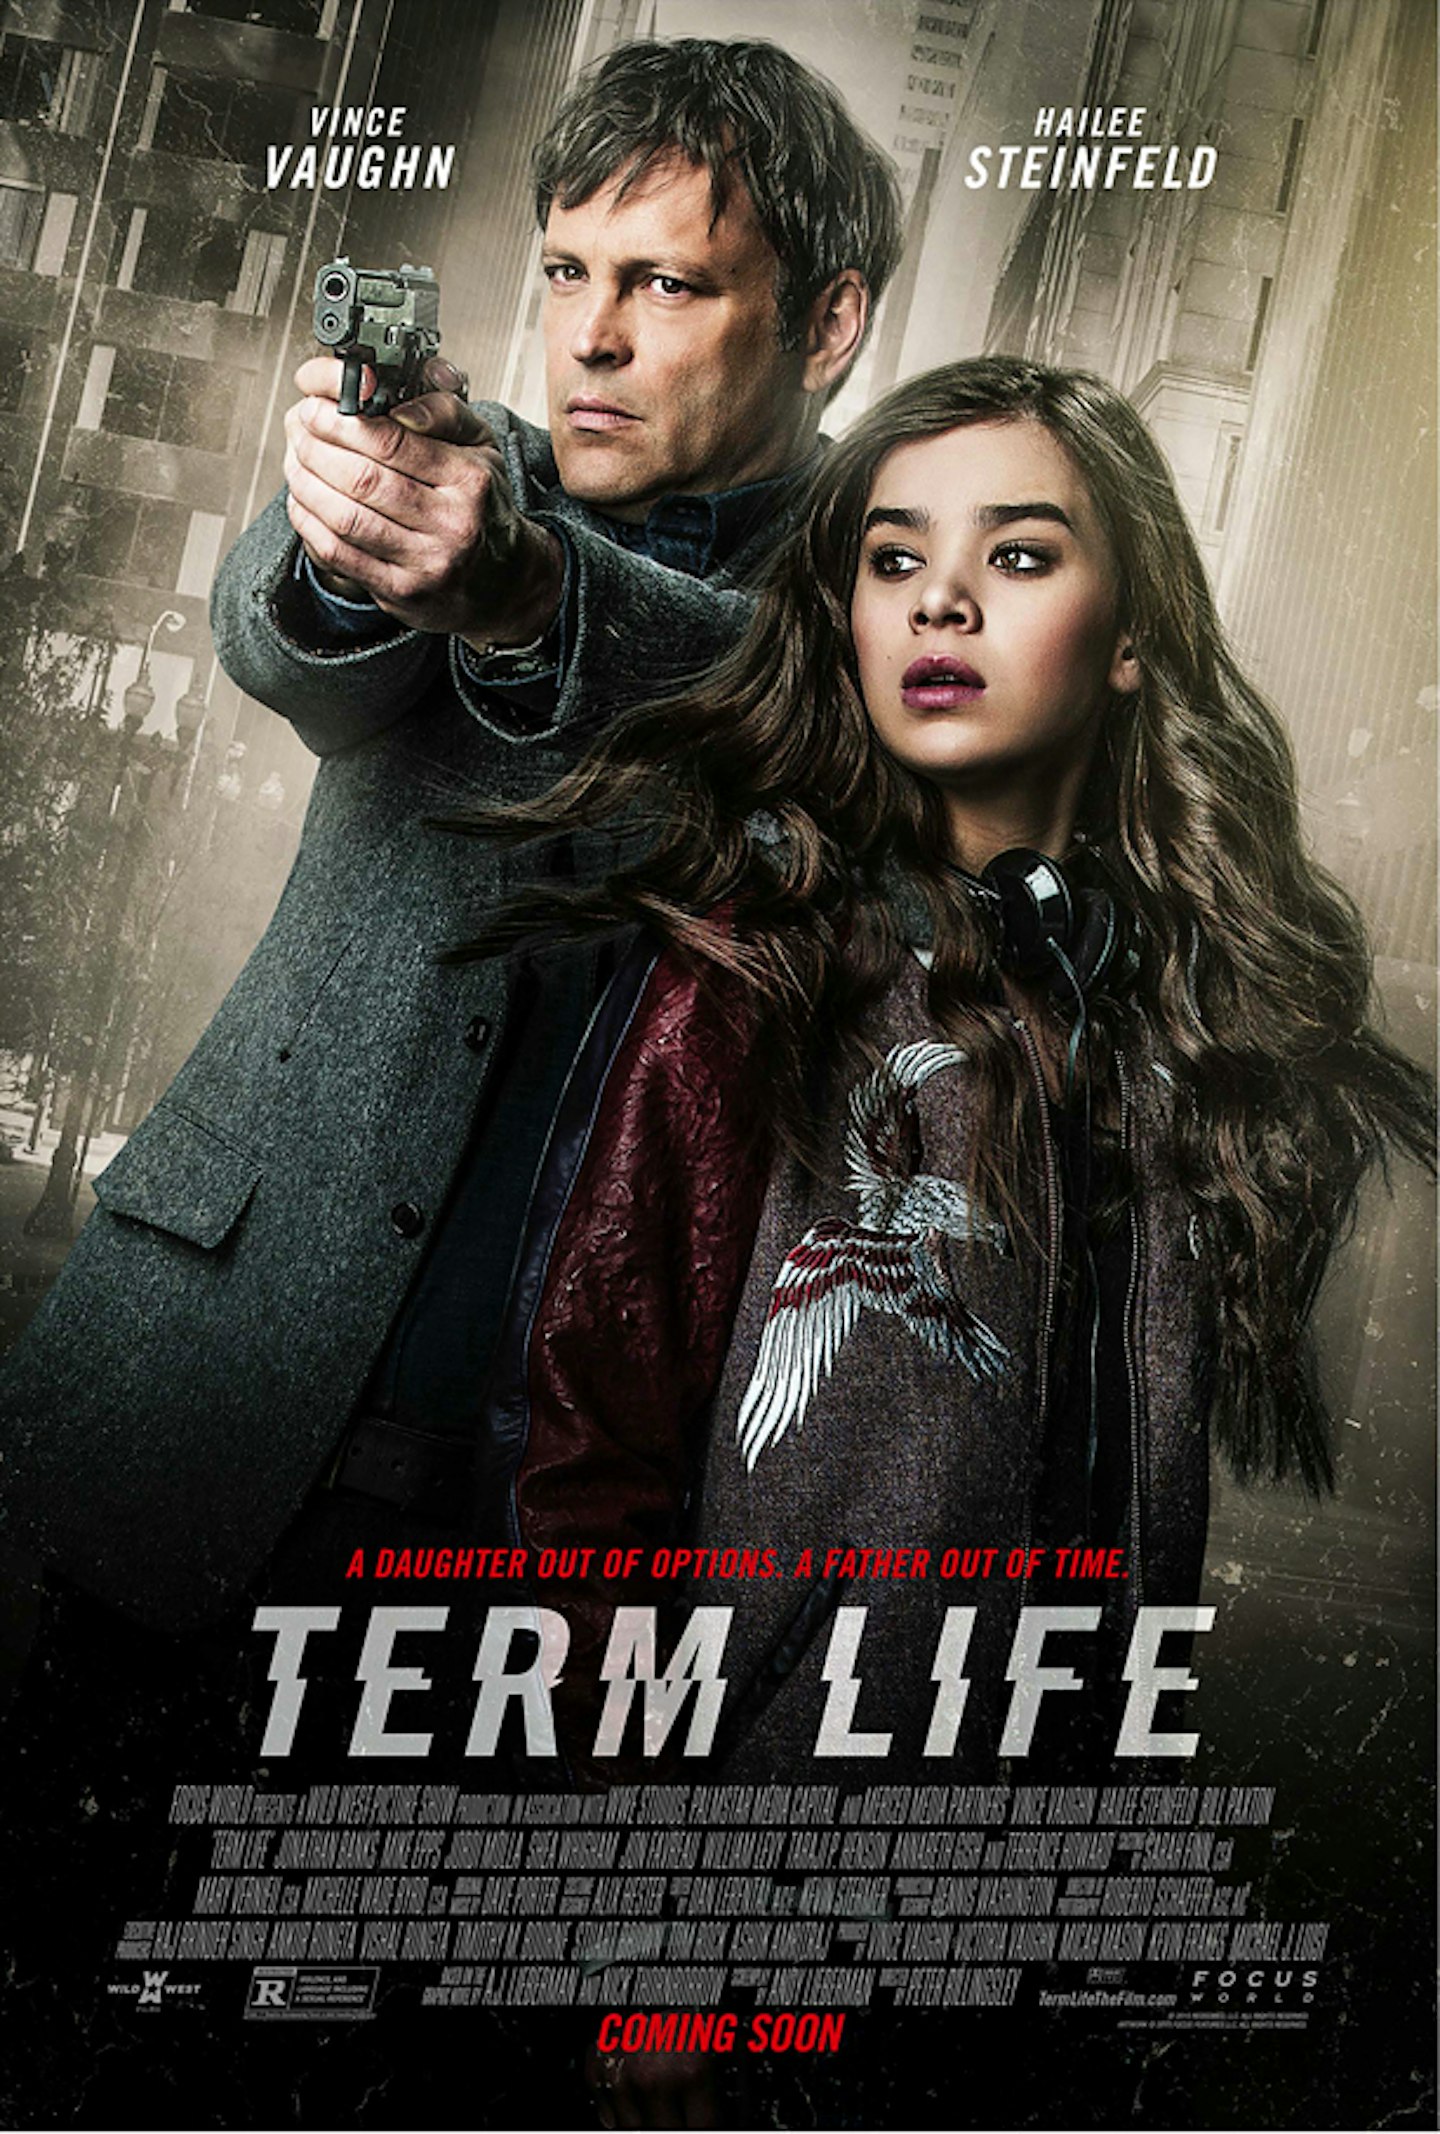 Term Life poster - Vince Vaughn & Hailee Steinfeld